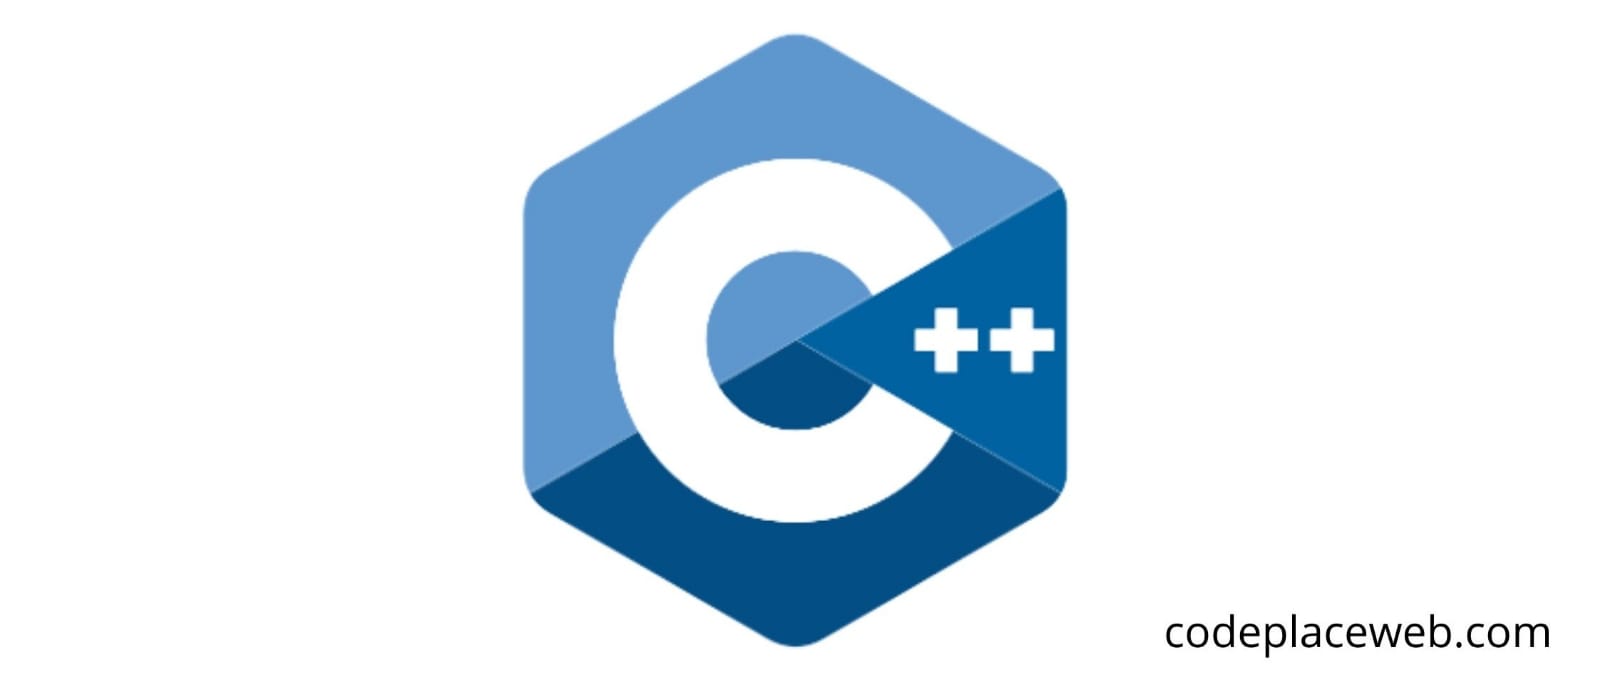 C++ Programming Languages for Web Development